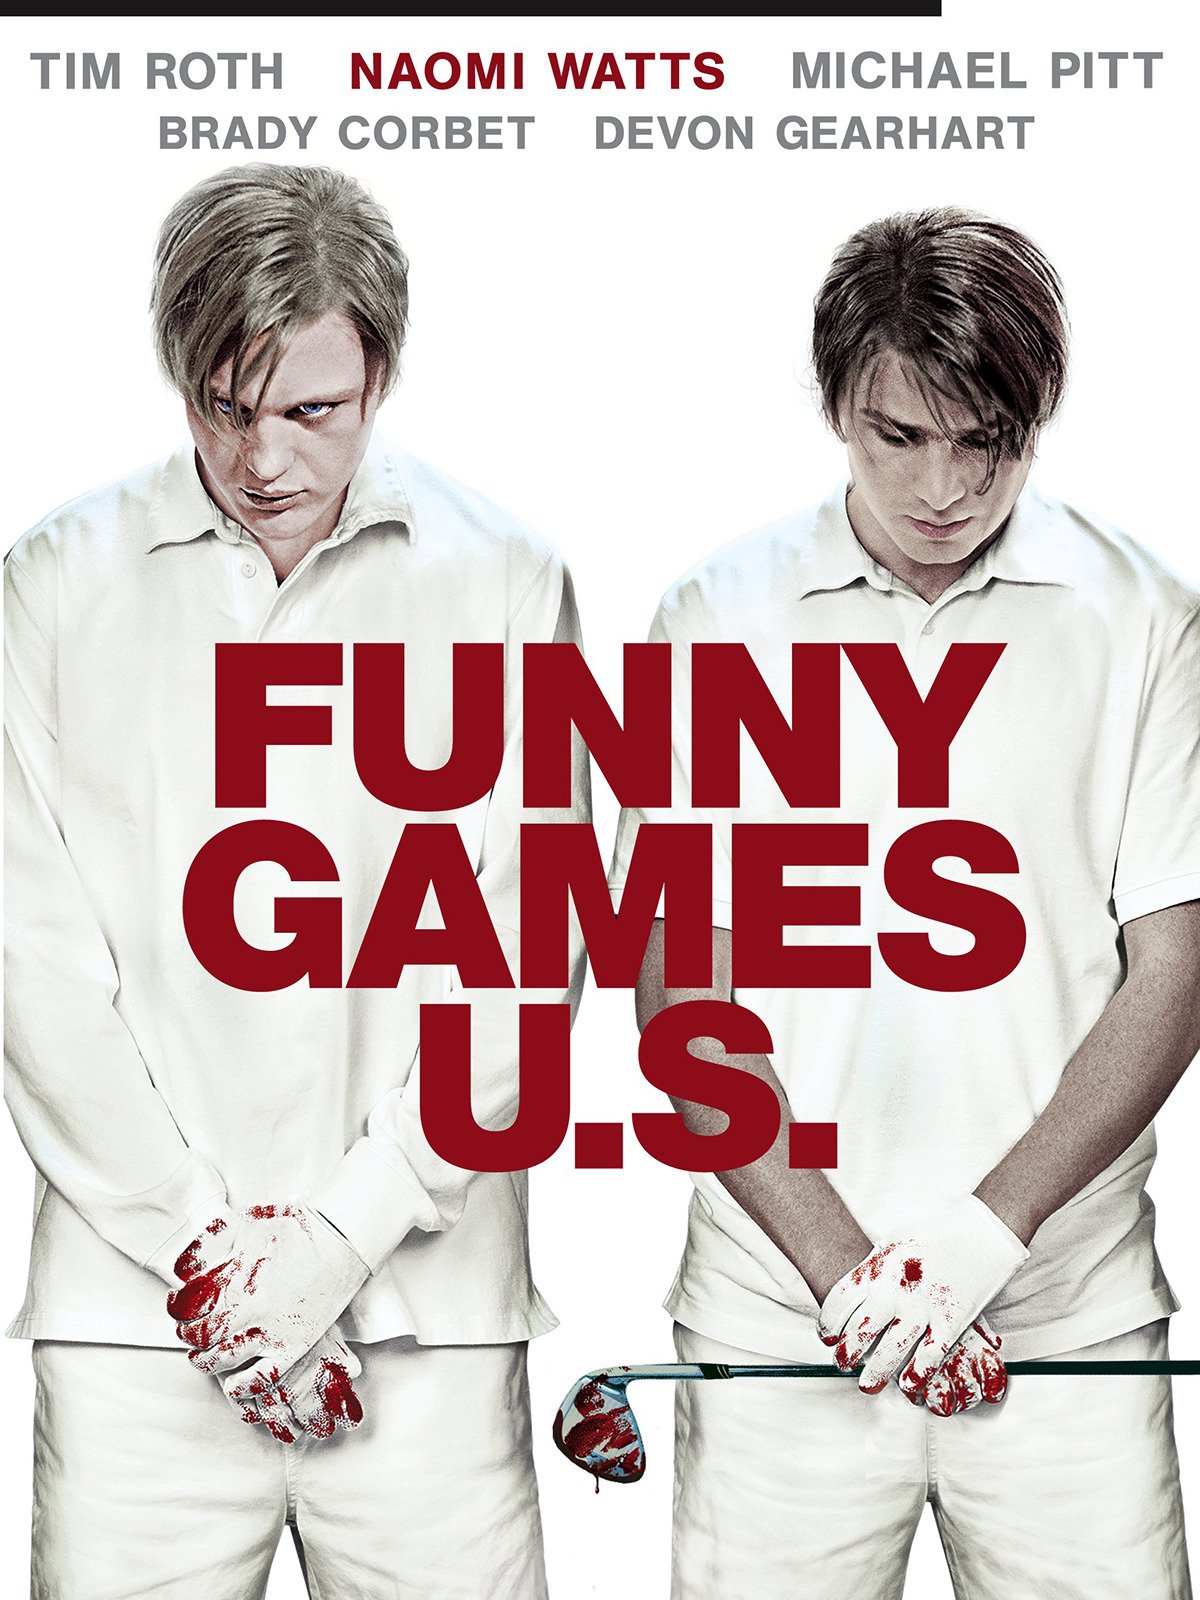 Stiahni si HD Filmy Funny Games USA / Funny Games U.S. (2007) CZ/EN (1080p) = CSFD 71%